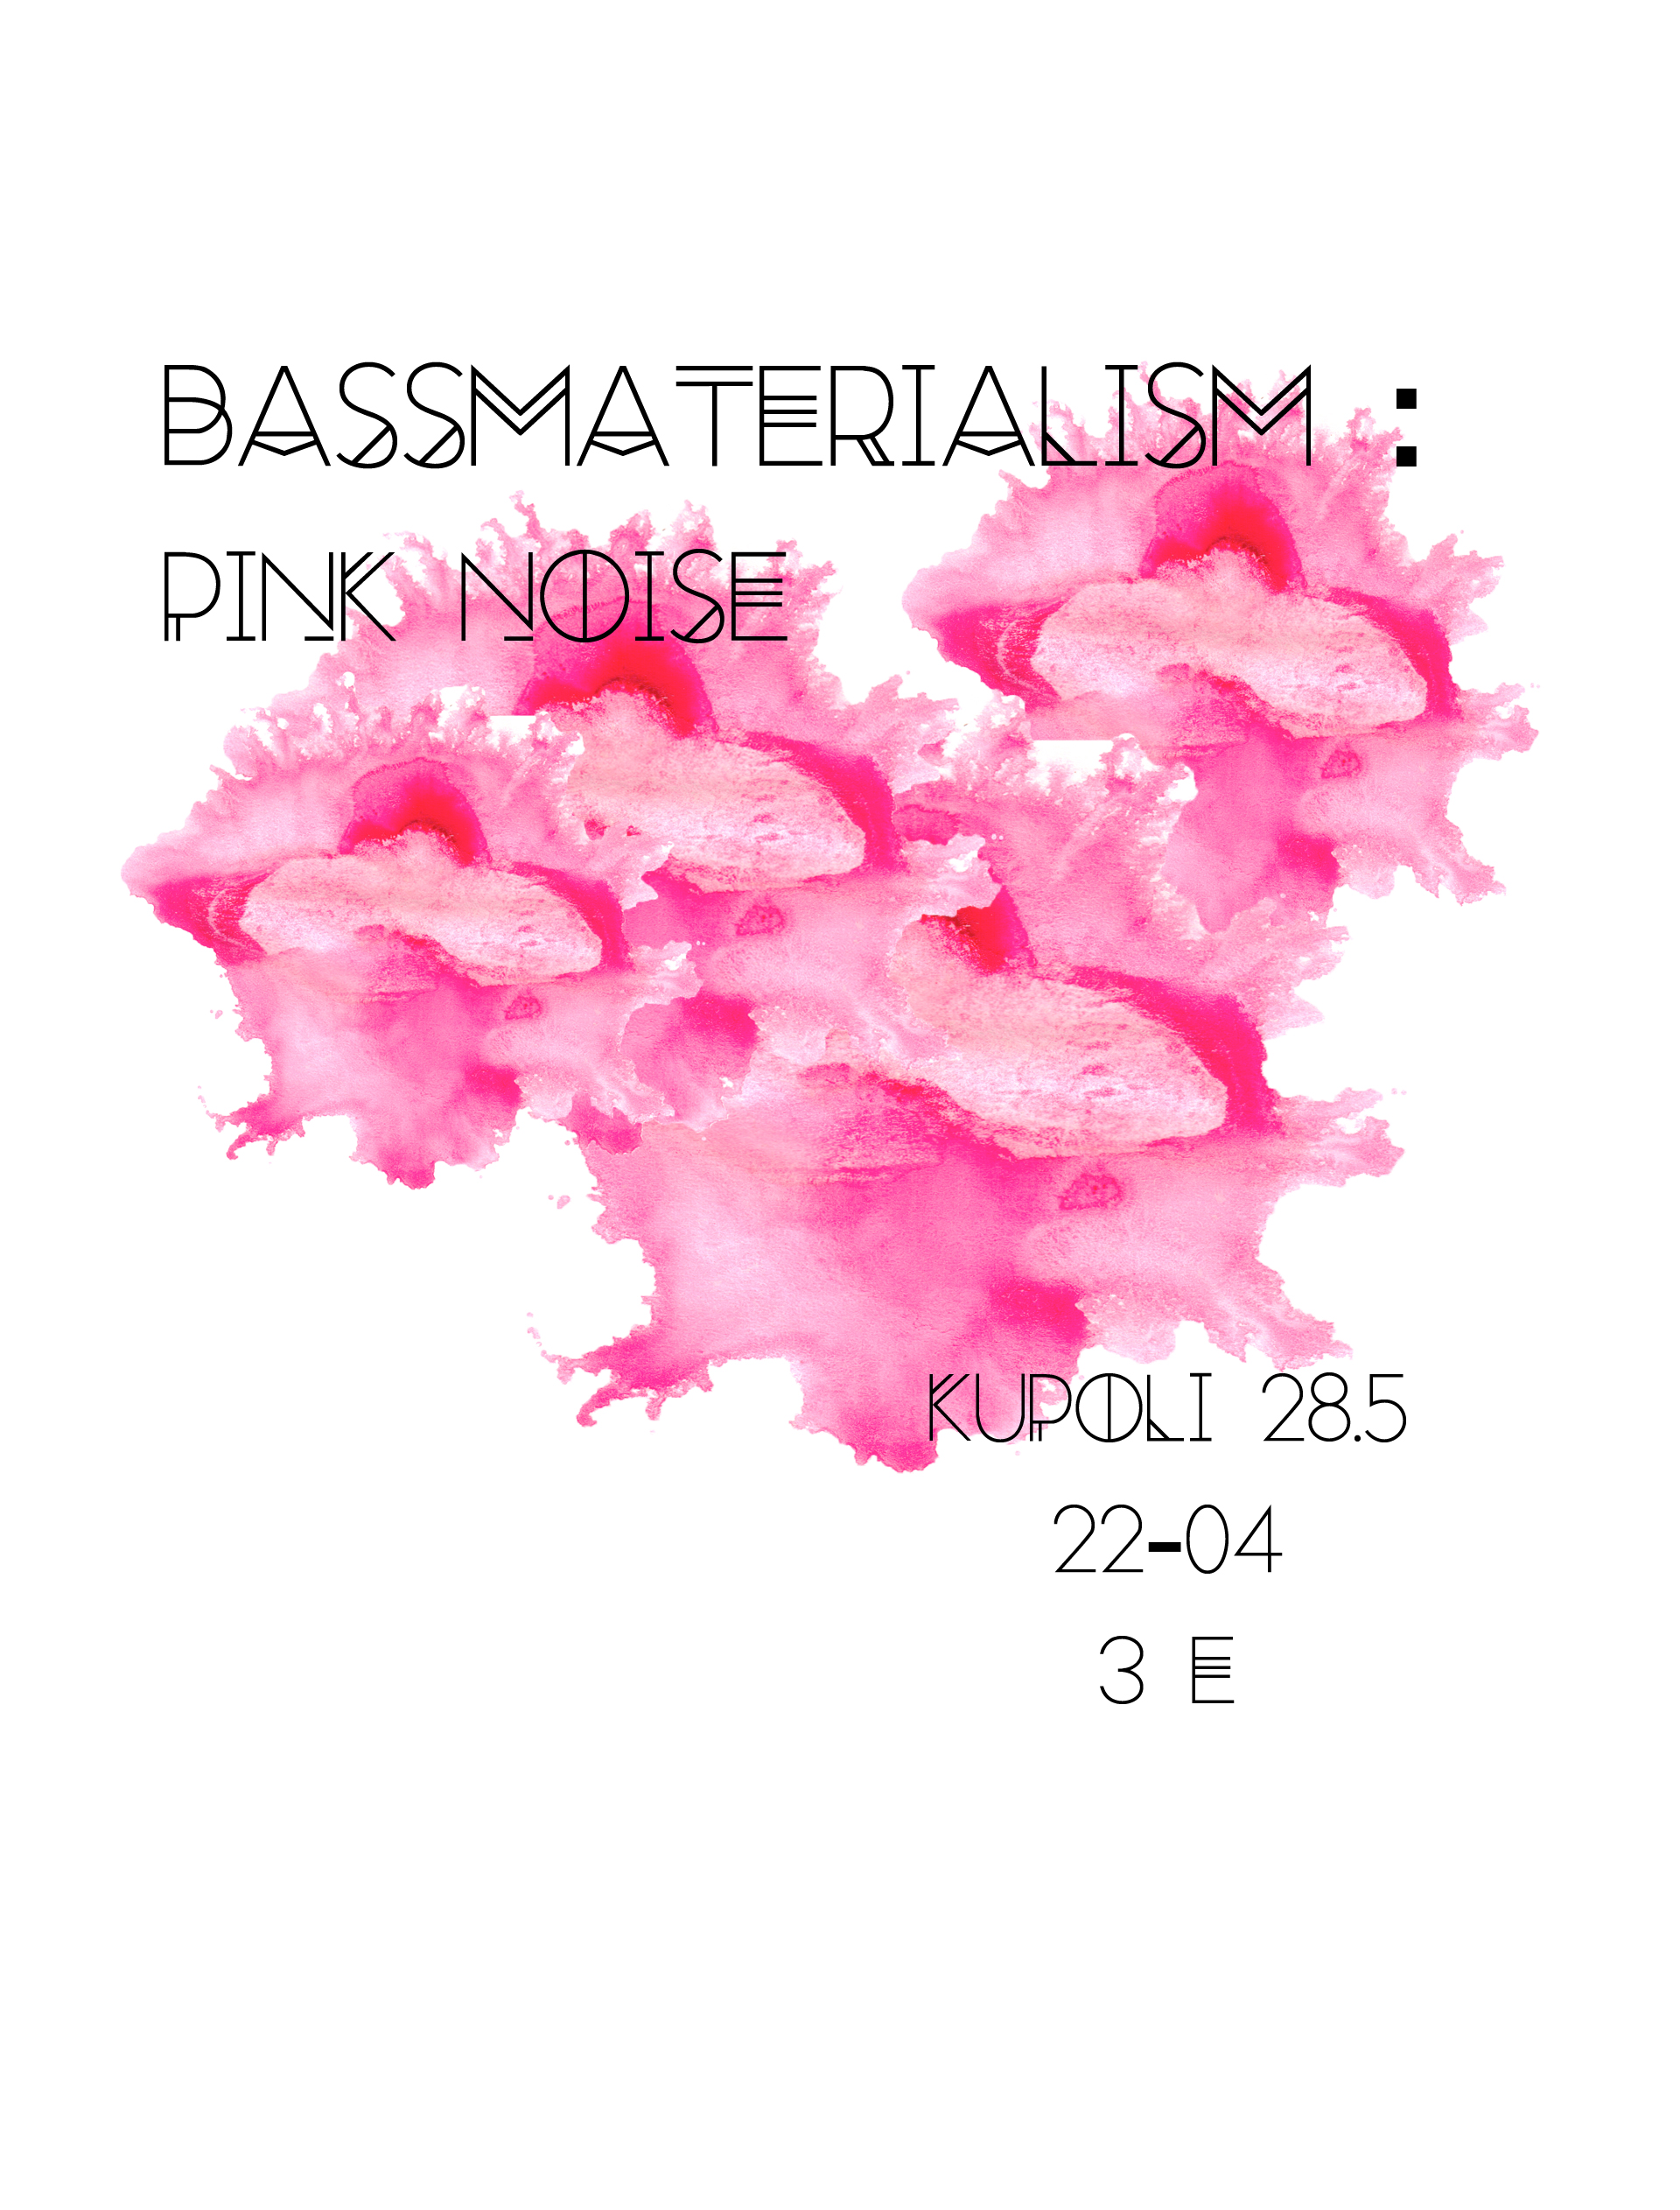 Bassmaterialism2